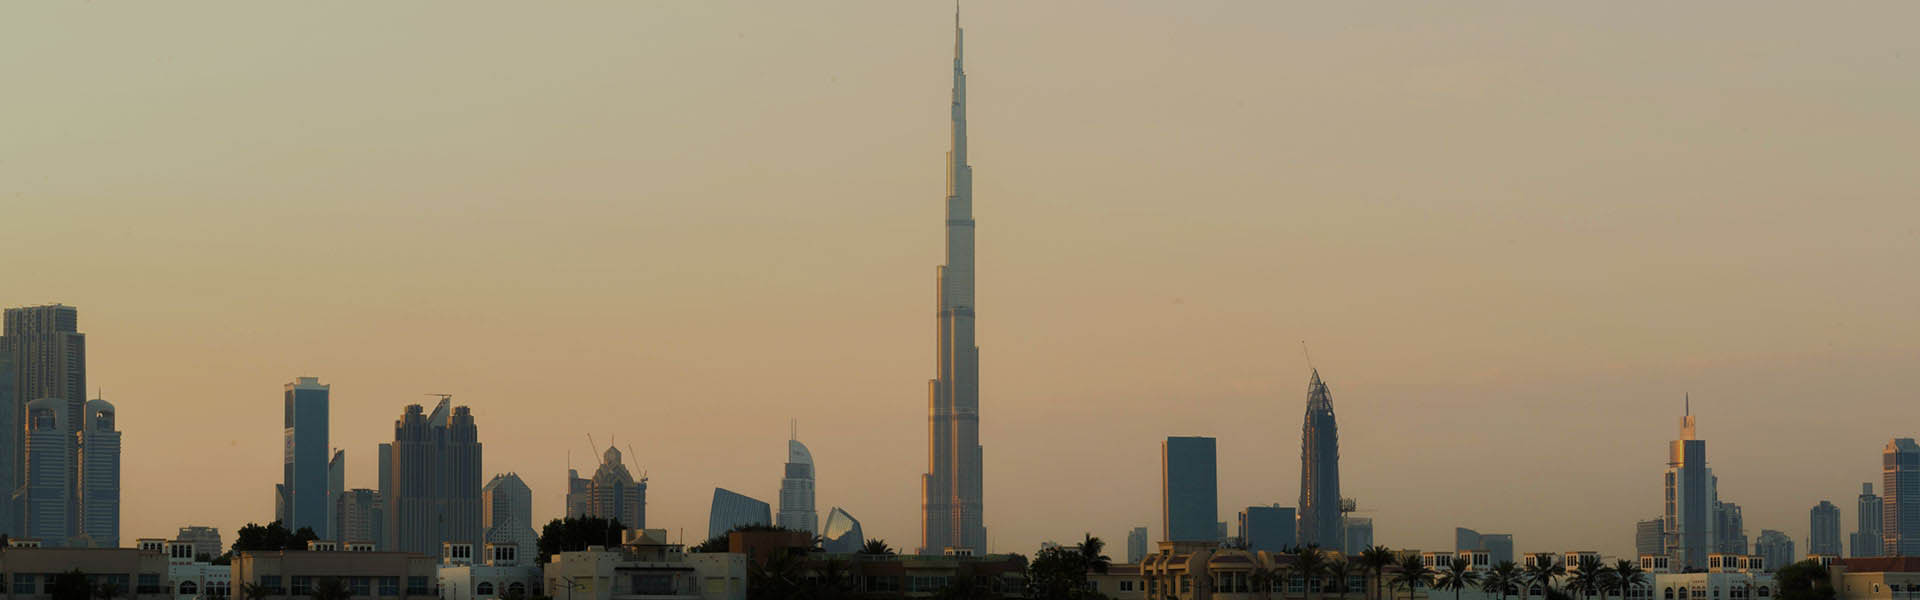 burj khalifa from a distance